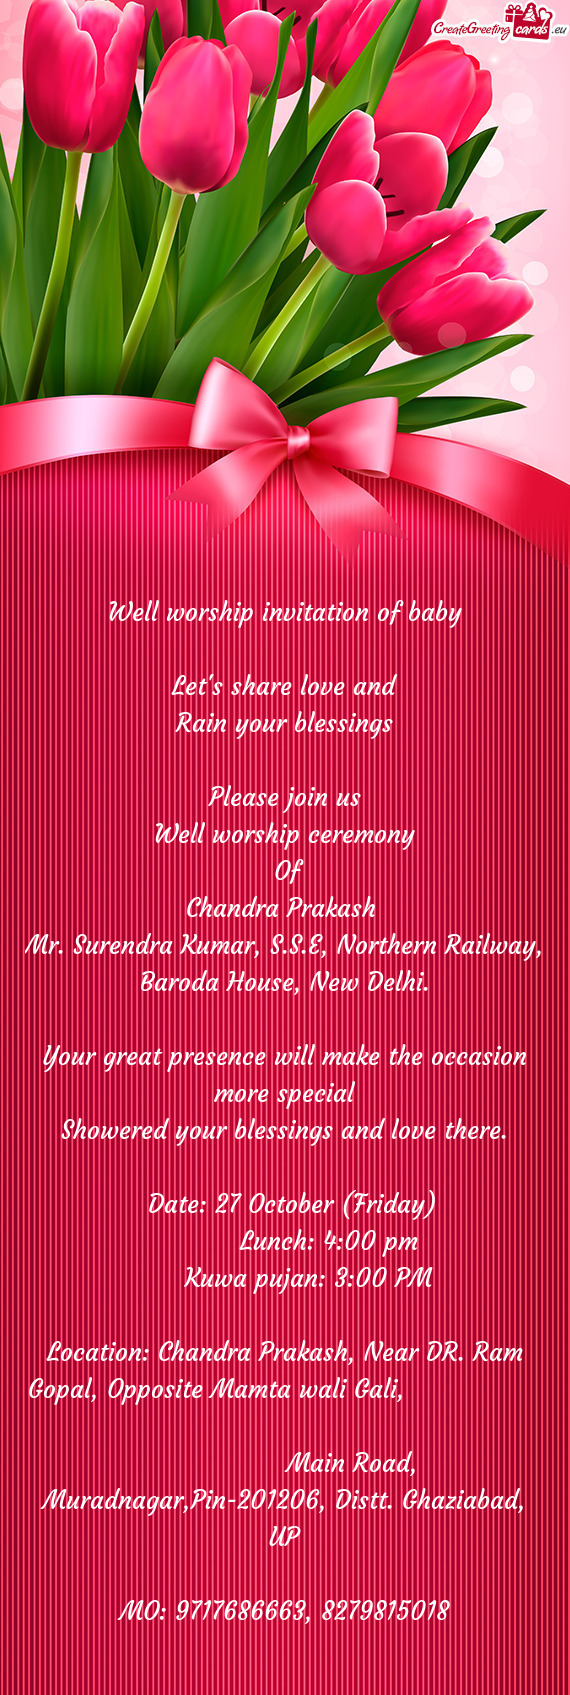 Well worship invitation of baby